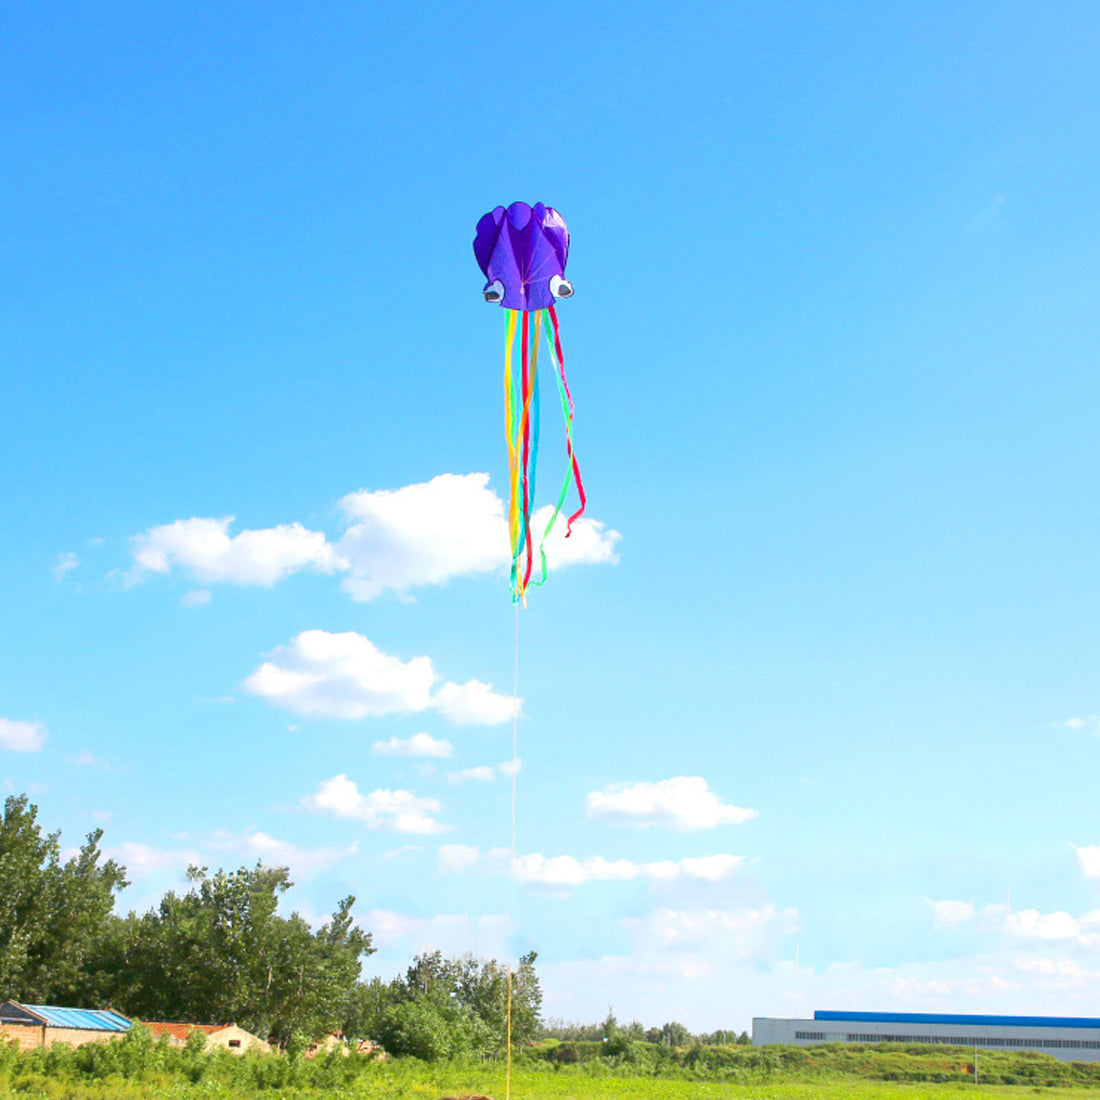 4m Software Octopus Kite Single Line Beach Kites